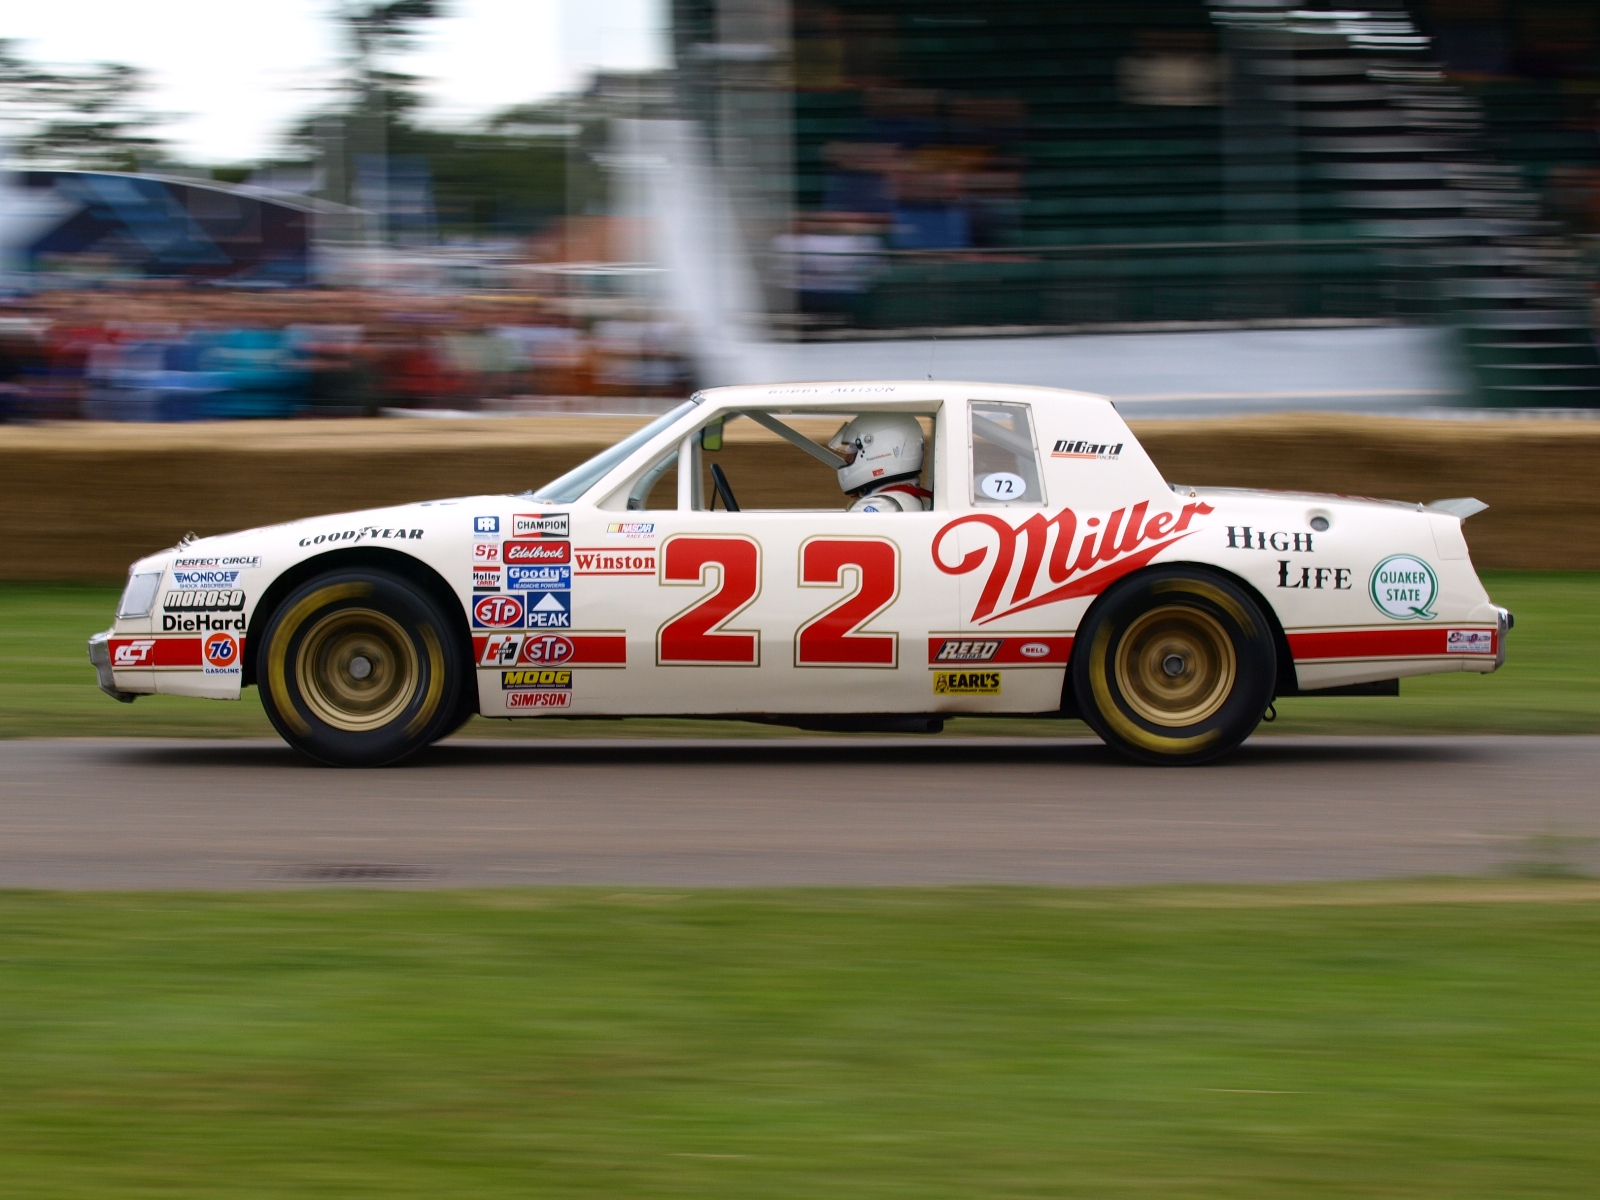 Bobby_Allison's_1983_championship_NASCAR_car.jpg